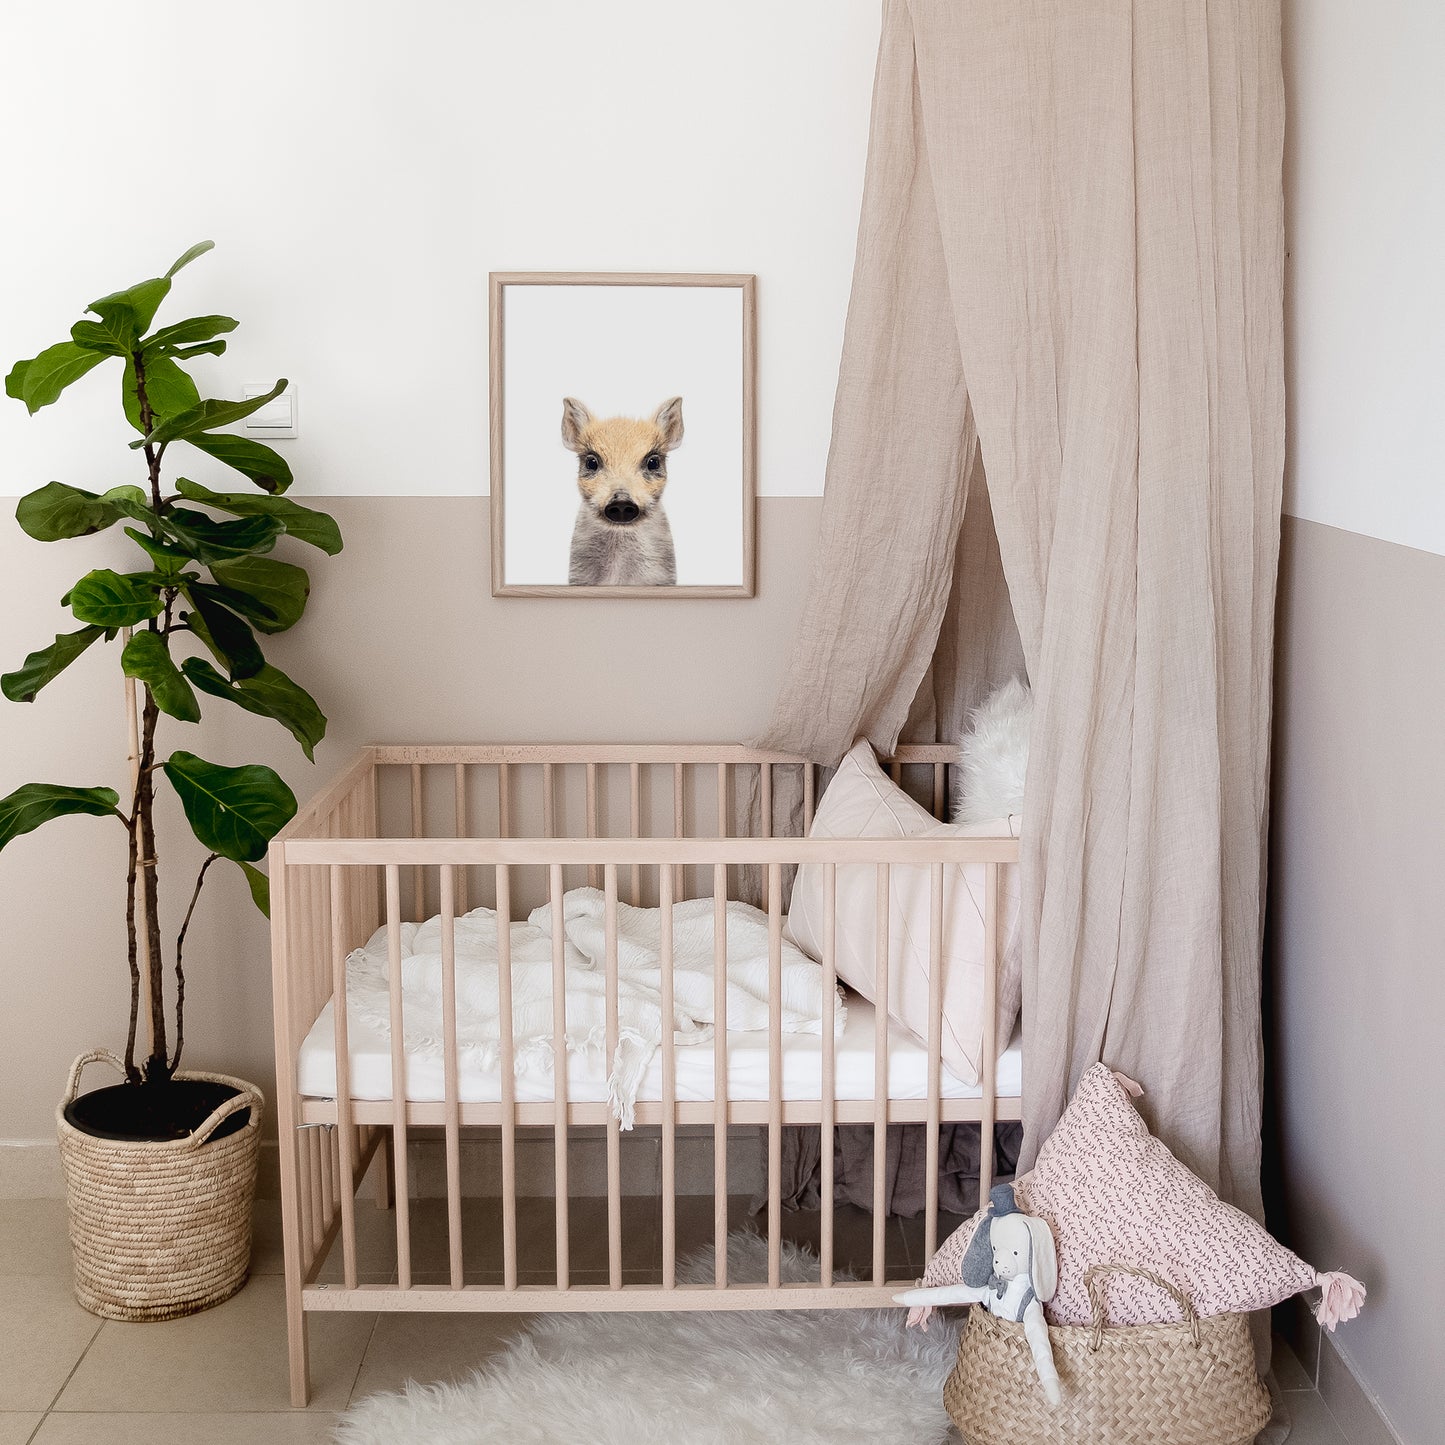 Baby Boar Print in a girl nursery above the crib 